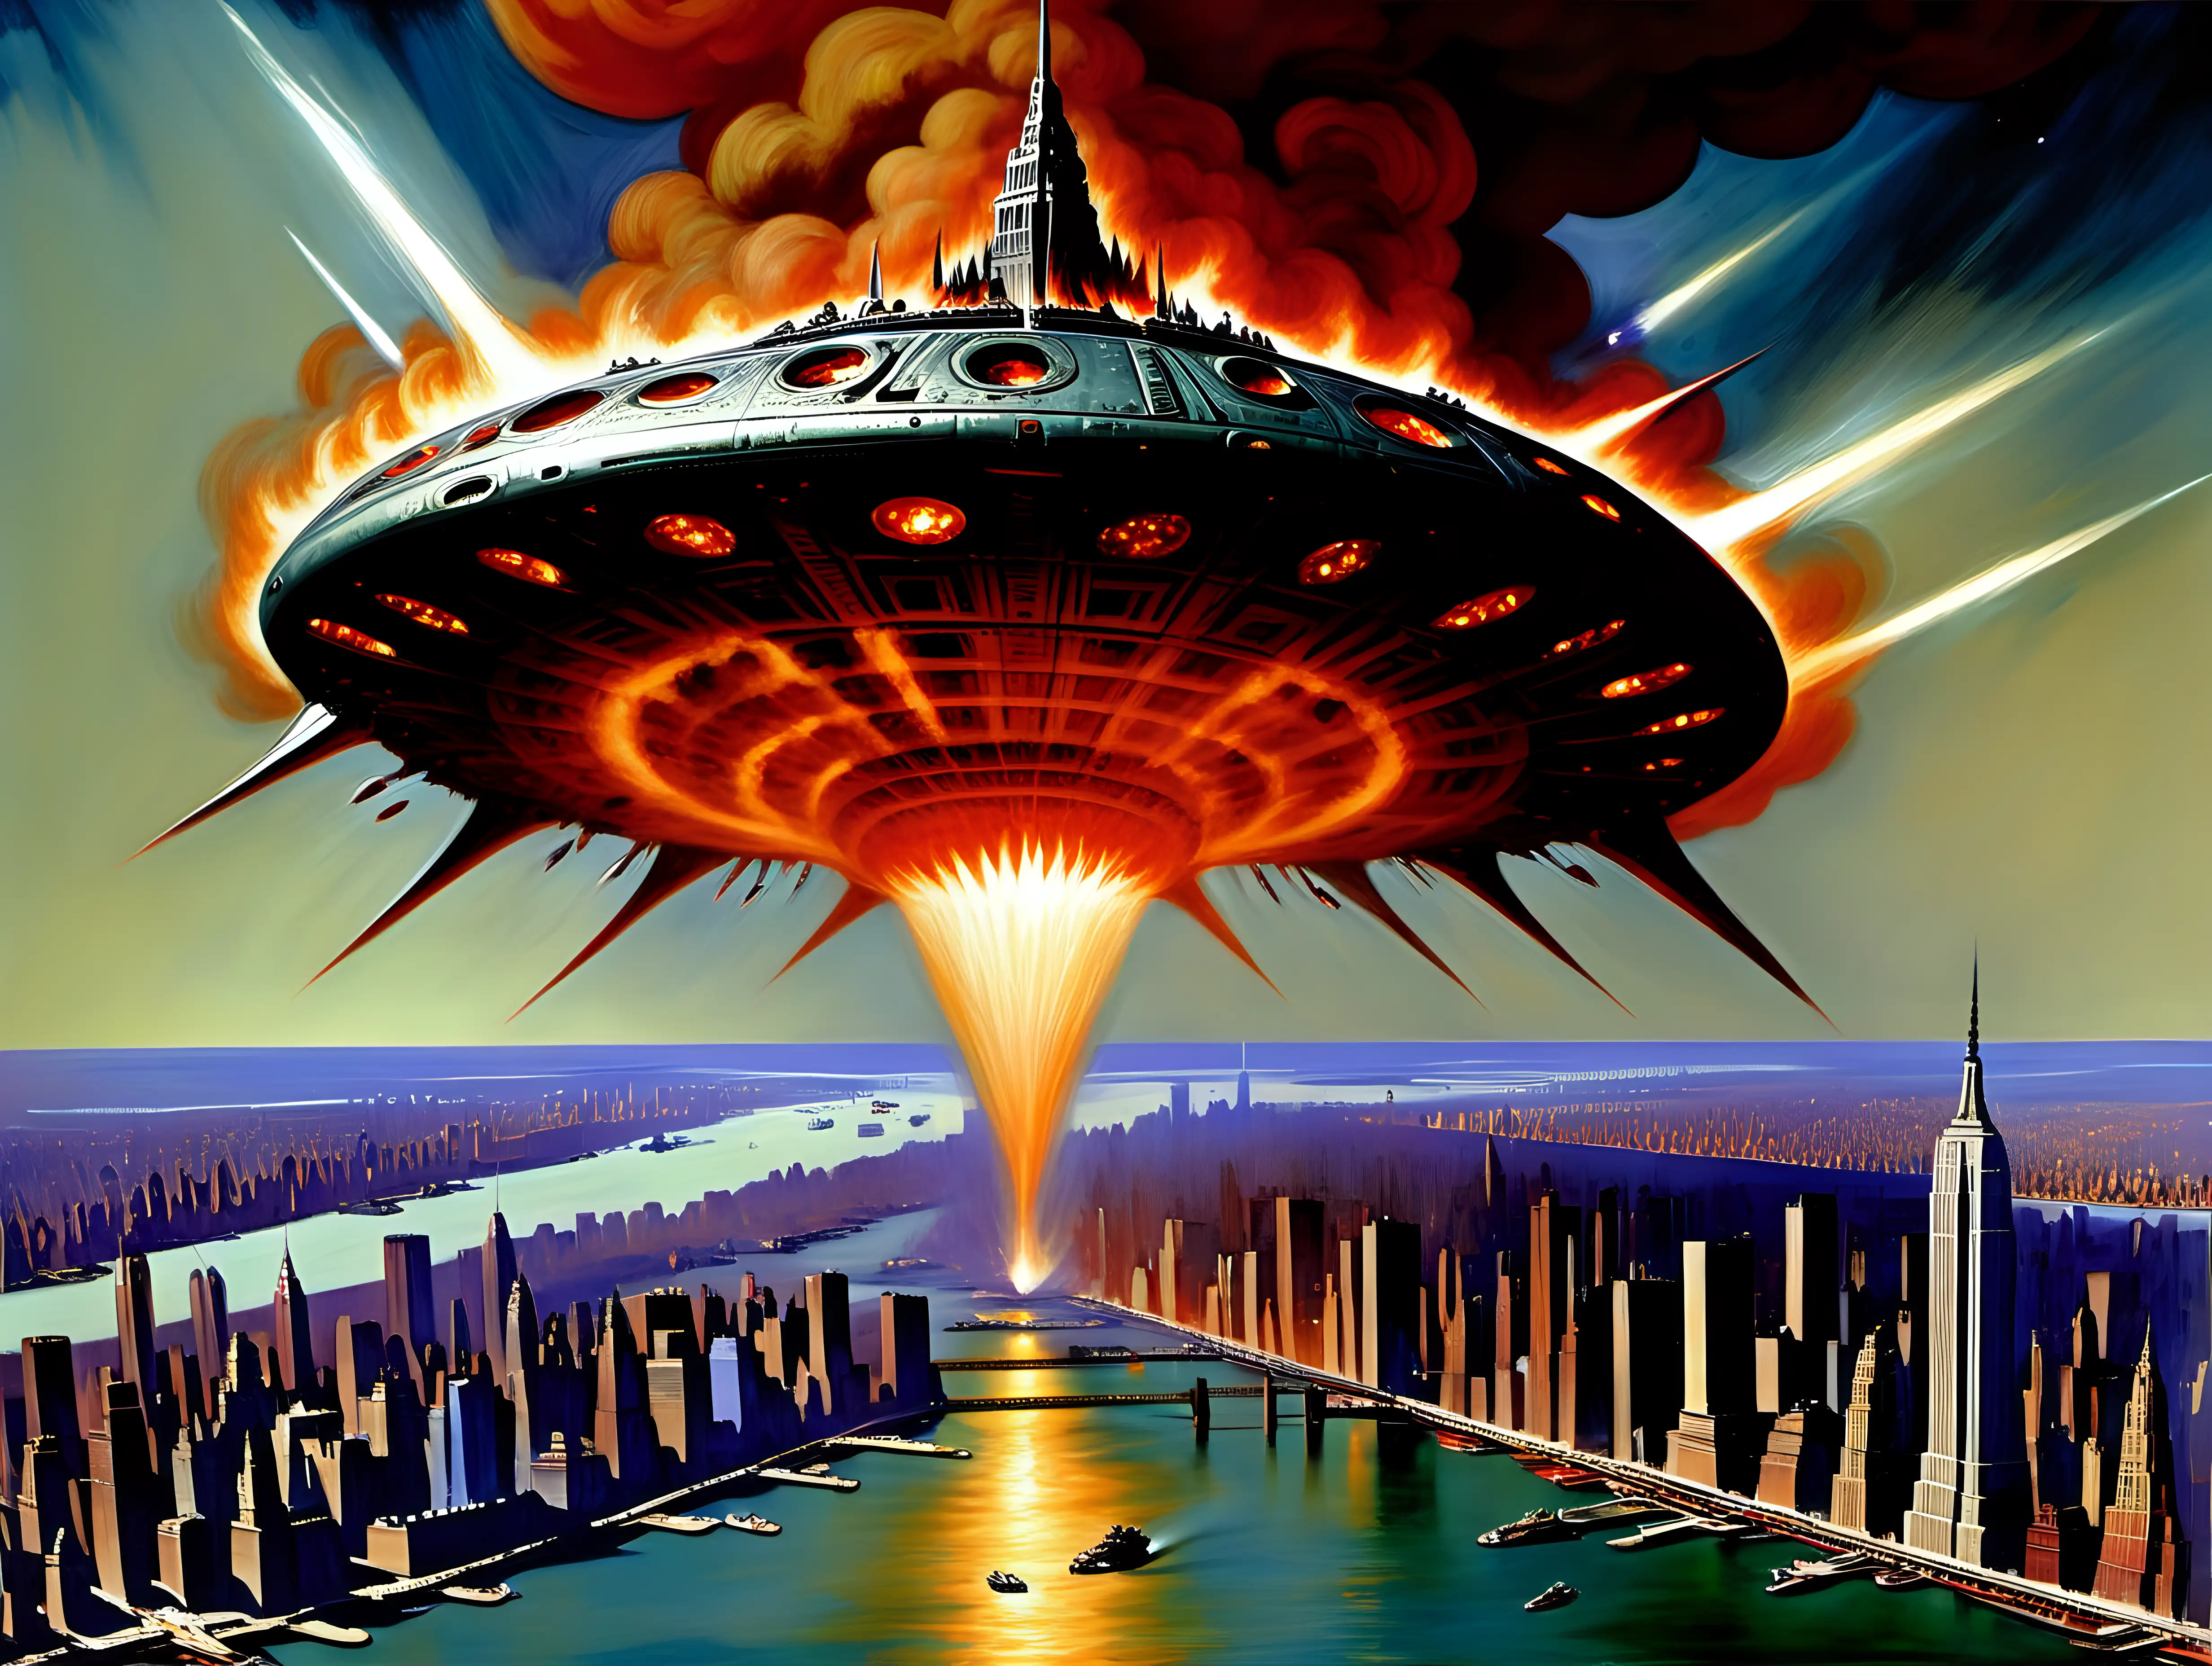 alien spacecraft attacking NYC on fire in 1940   Frank Frazetta style